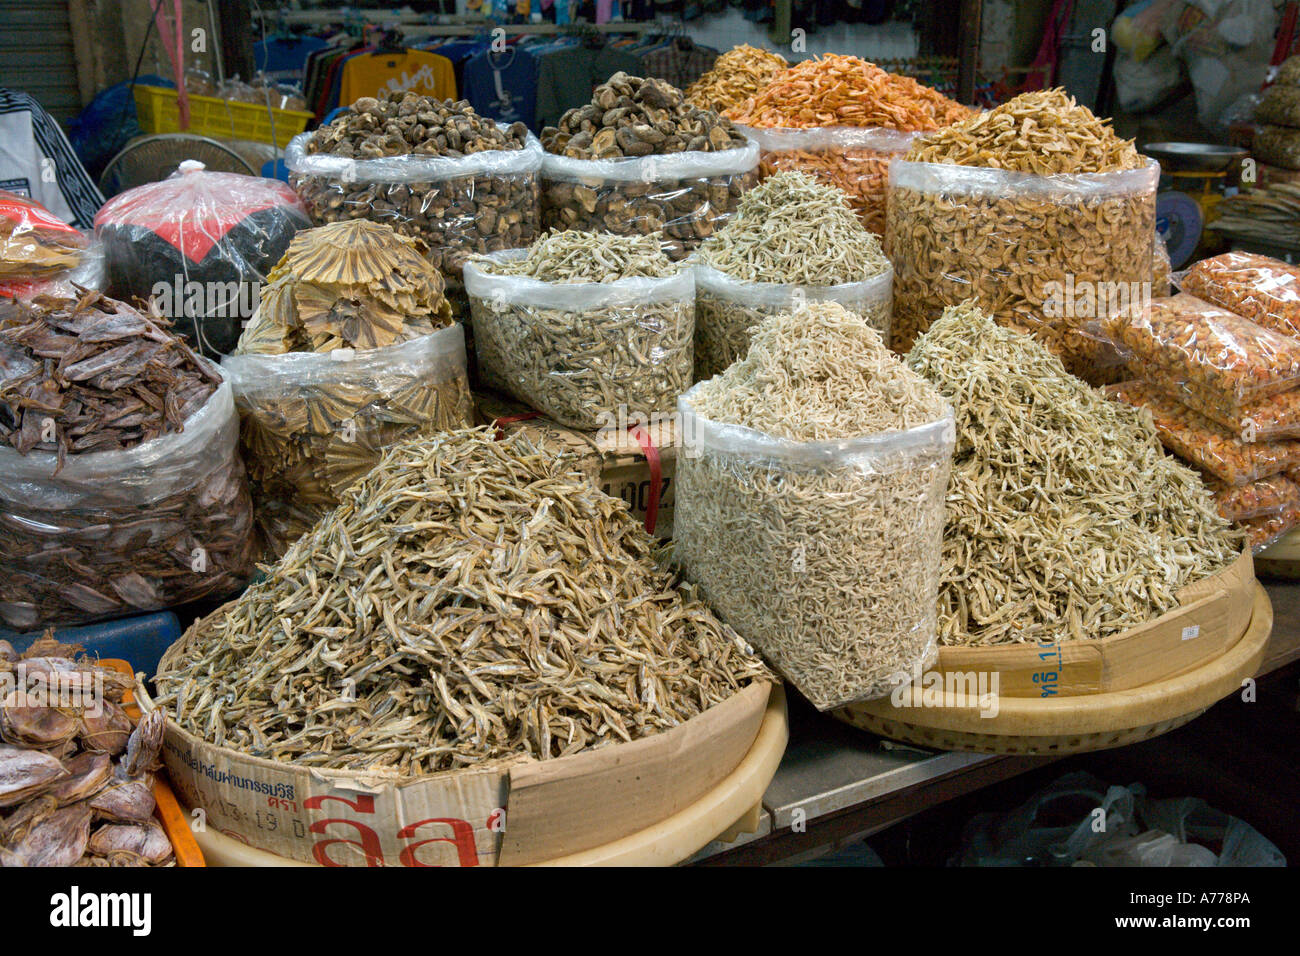 Market Stall in the Fish Market selling dried fish, Phuket Town, Phuket, Thailand Stock Photo